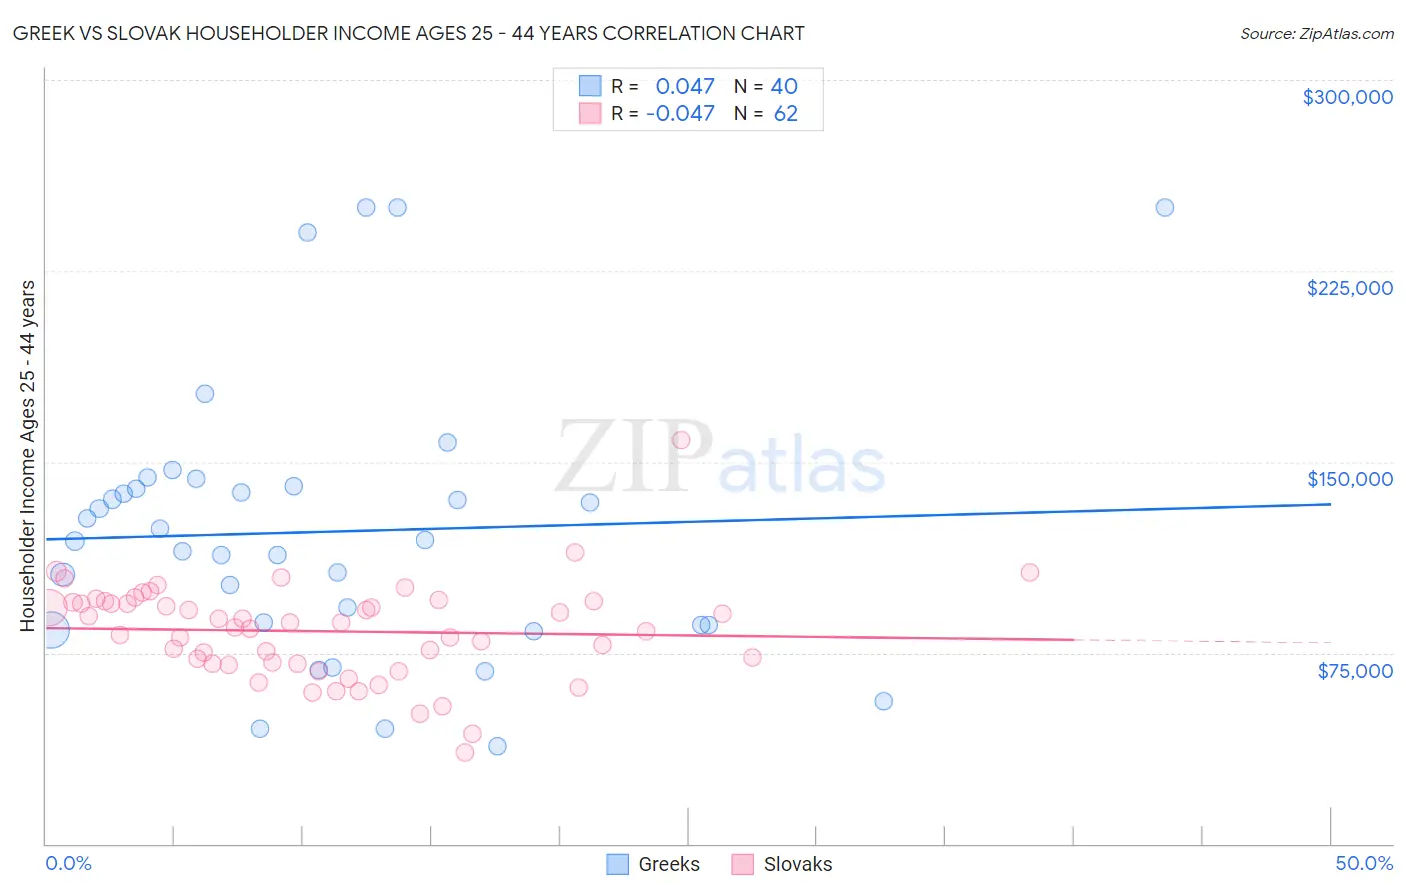 Greek vs Slovak Householder Income Ages 25 - 44 years